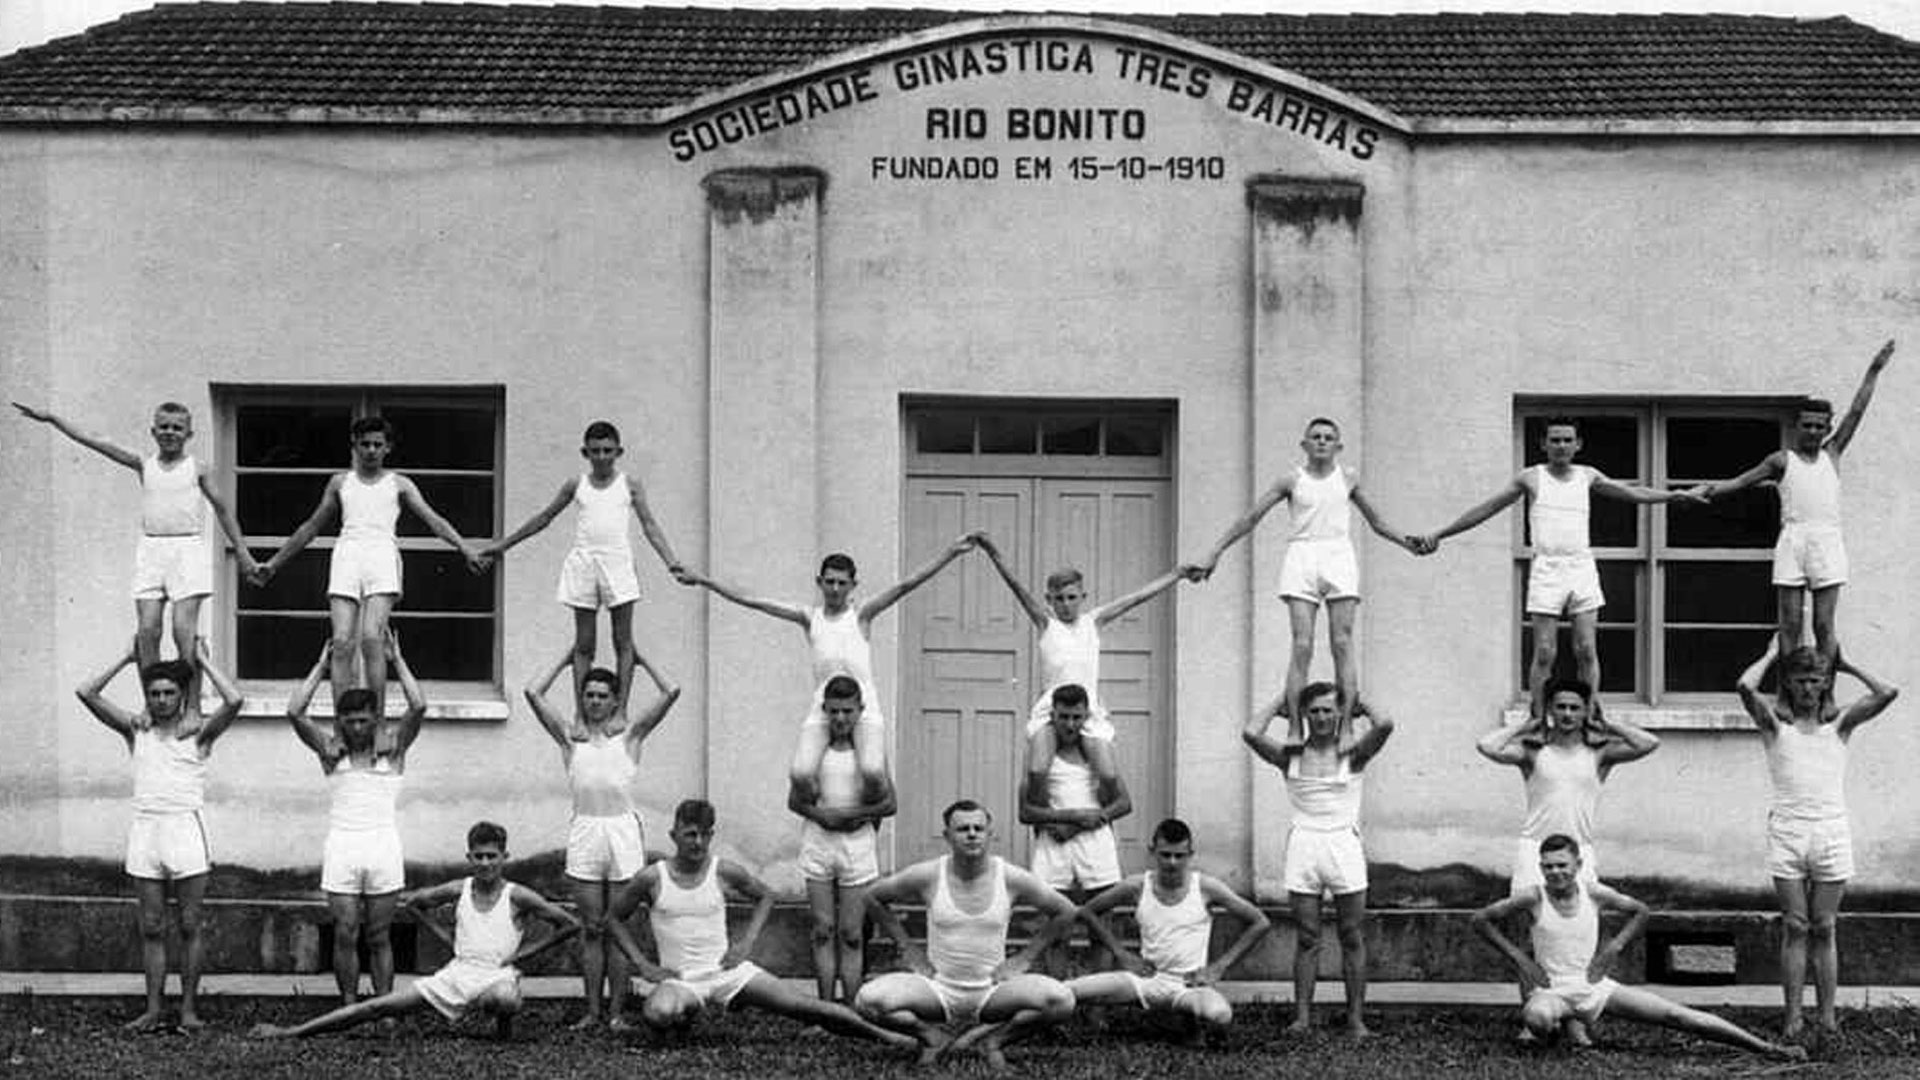 Sociedade Ginástica Tres Barras, Rio Bonito, Santa Catarina, gegründet am 15. 10. 1910, zum 50jährigen Jubiläum 1960. | Bildquelle: Archiv SC Tres Barras.